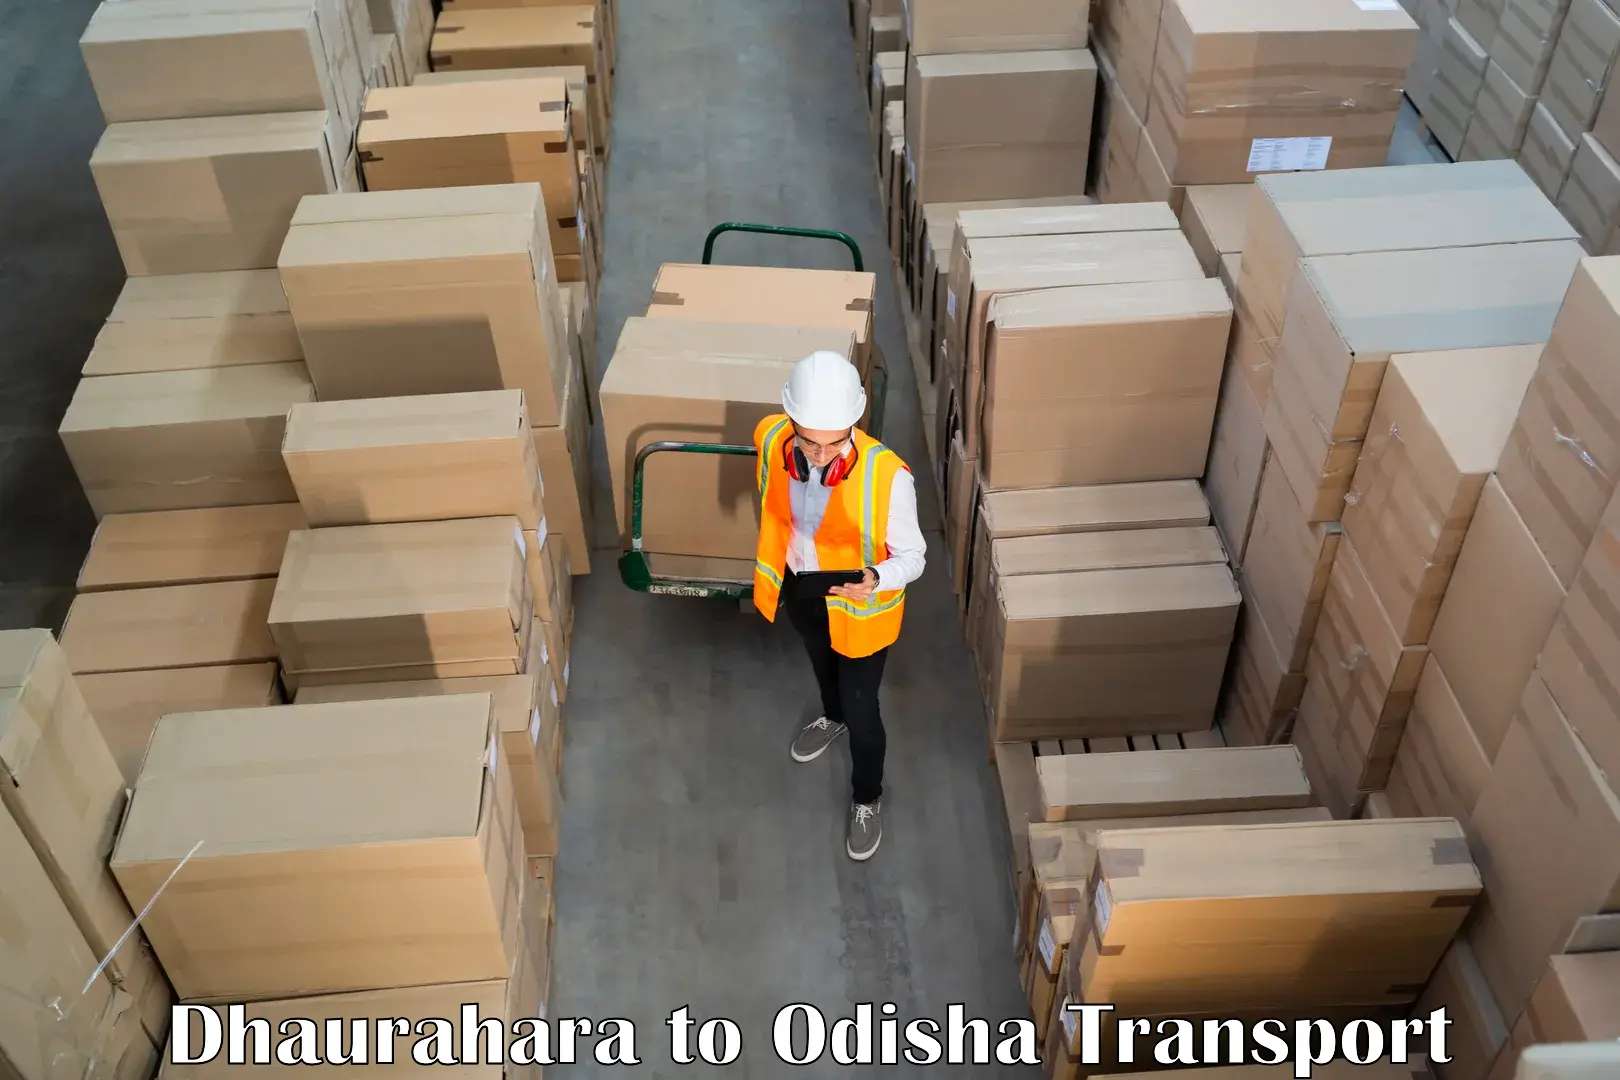 Truck transport companies in India Dhaurahara to Polasara